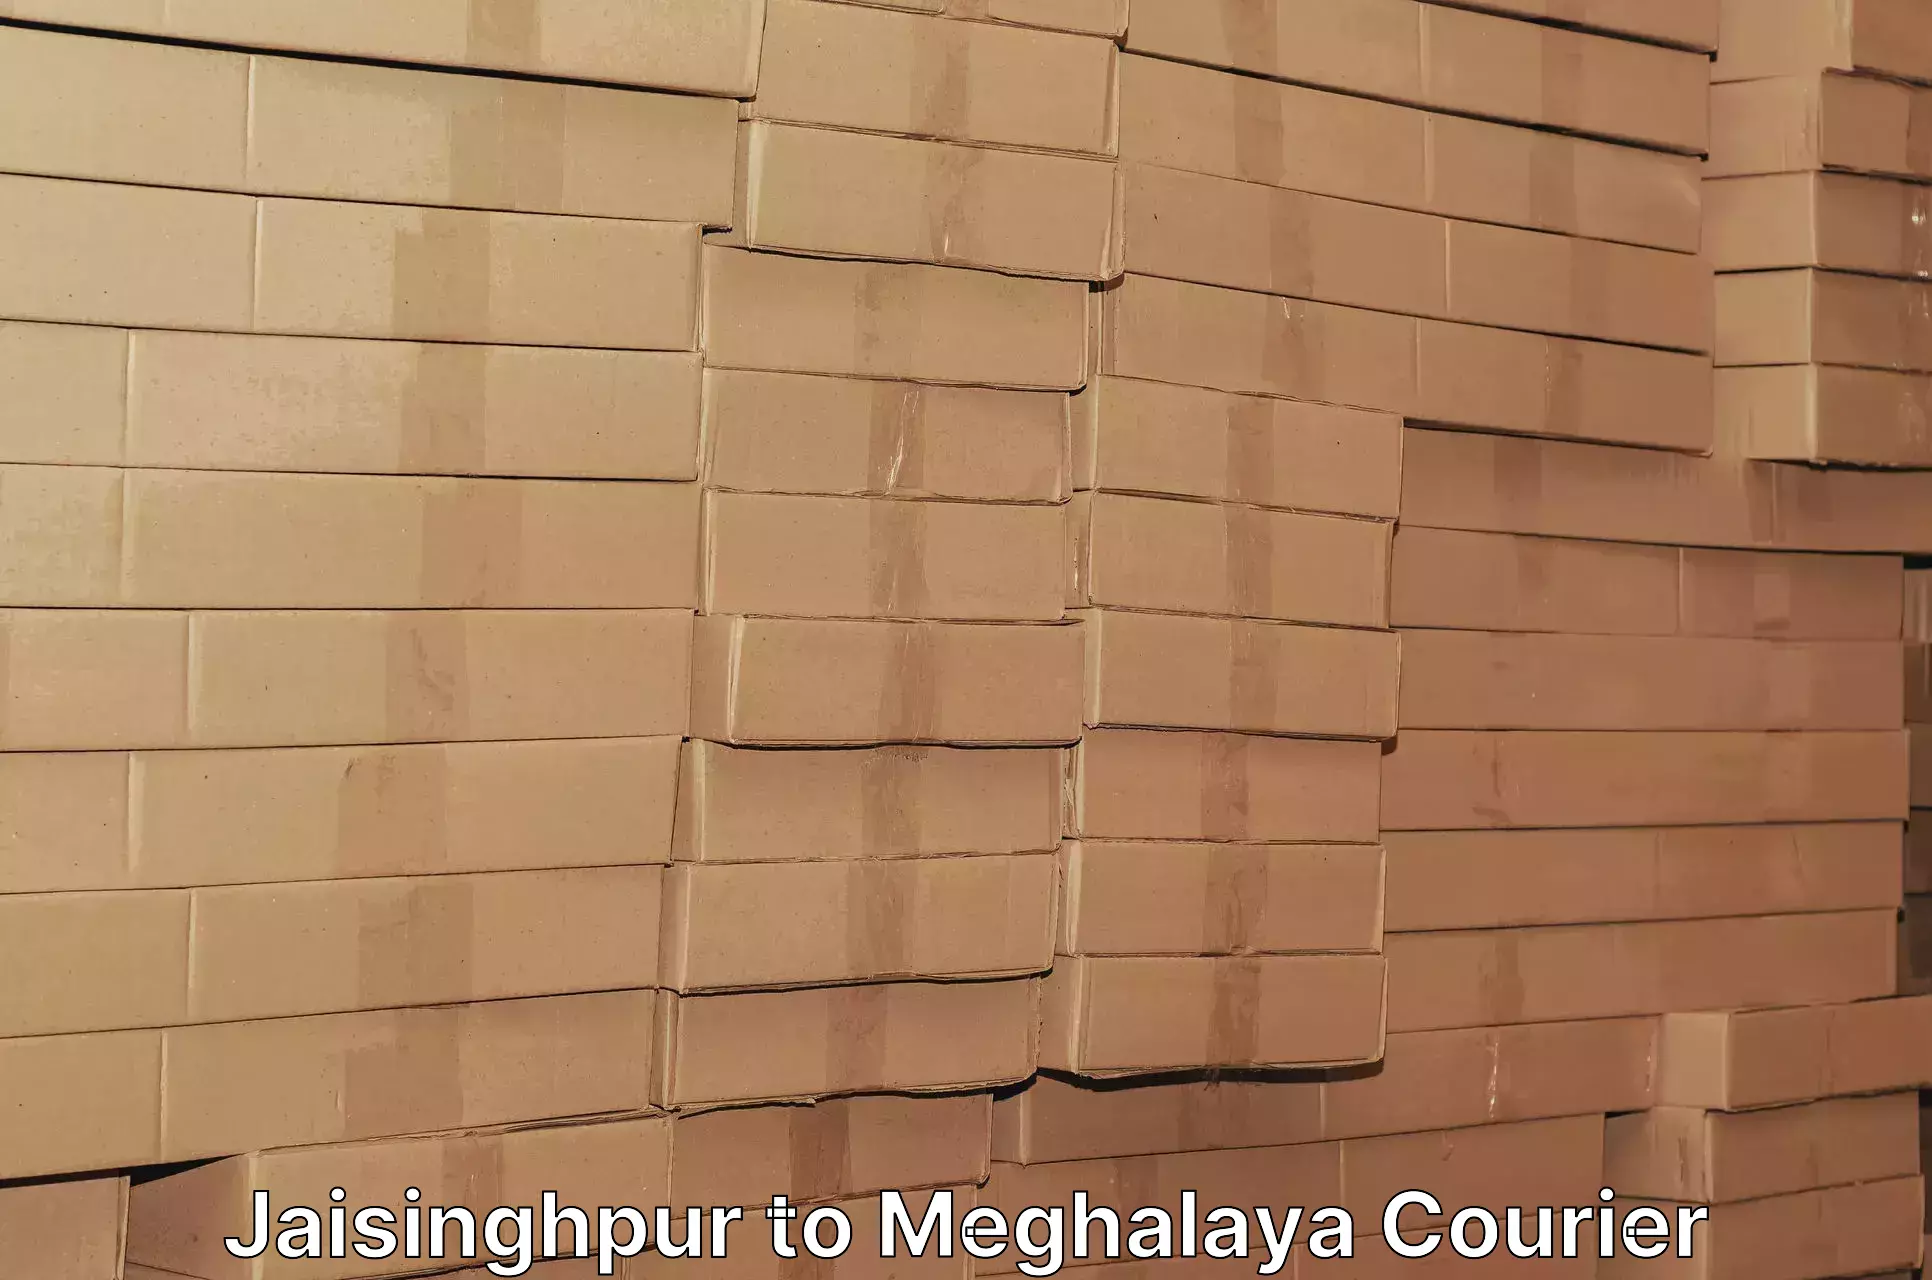 Business logistics support Jaisinghpur to Meghalaya